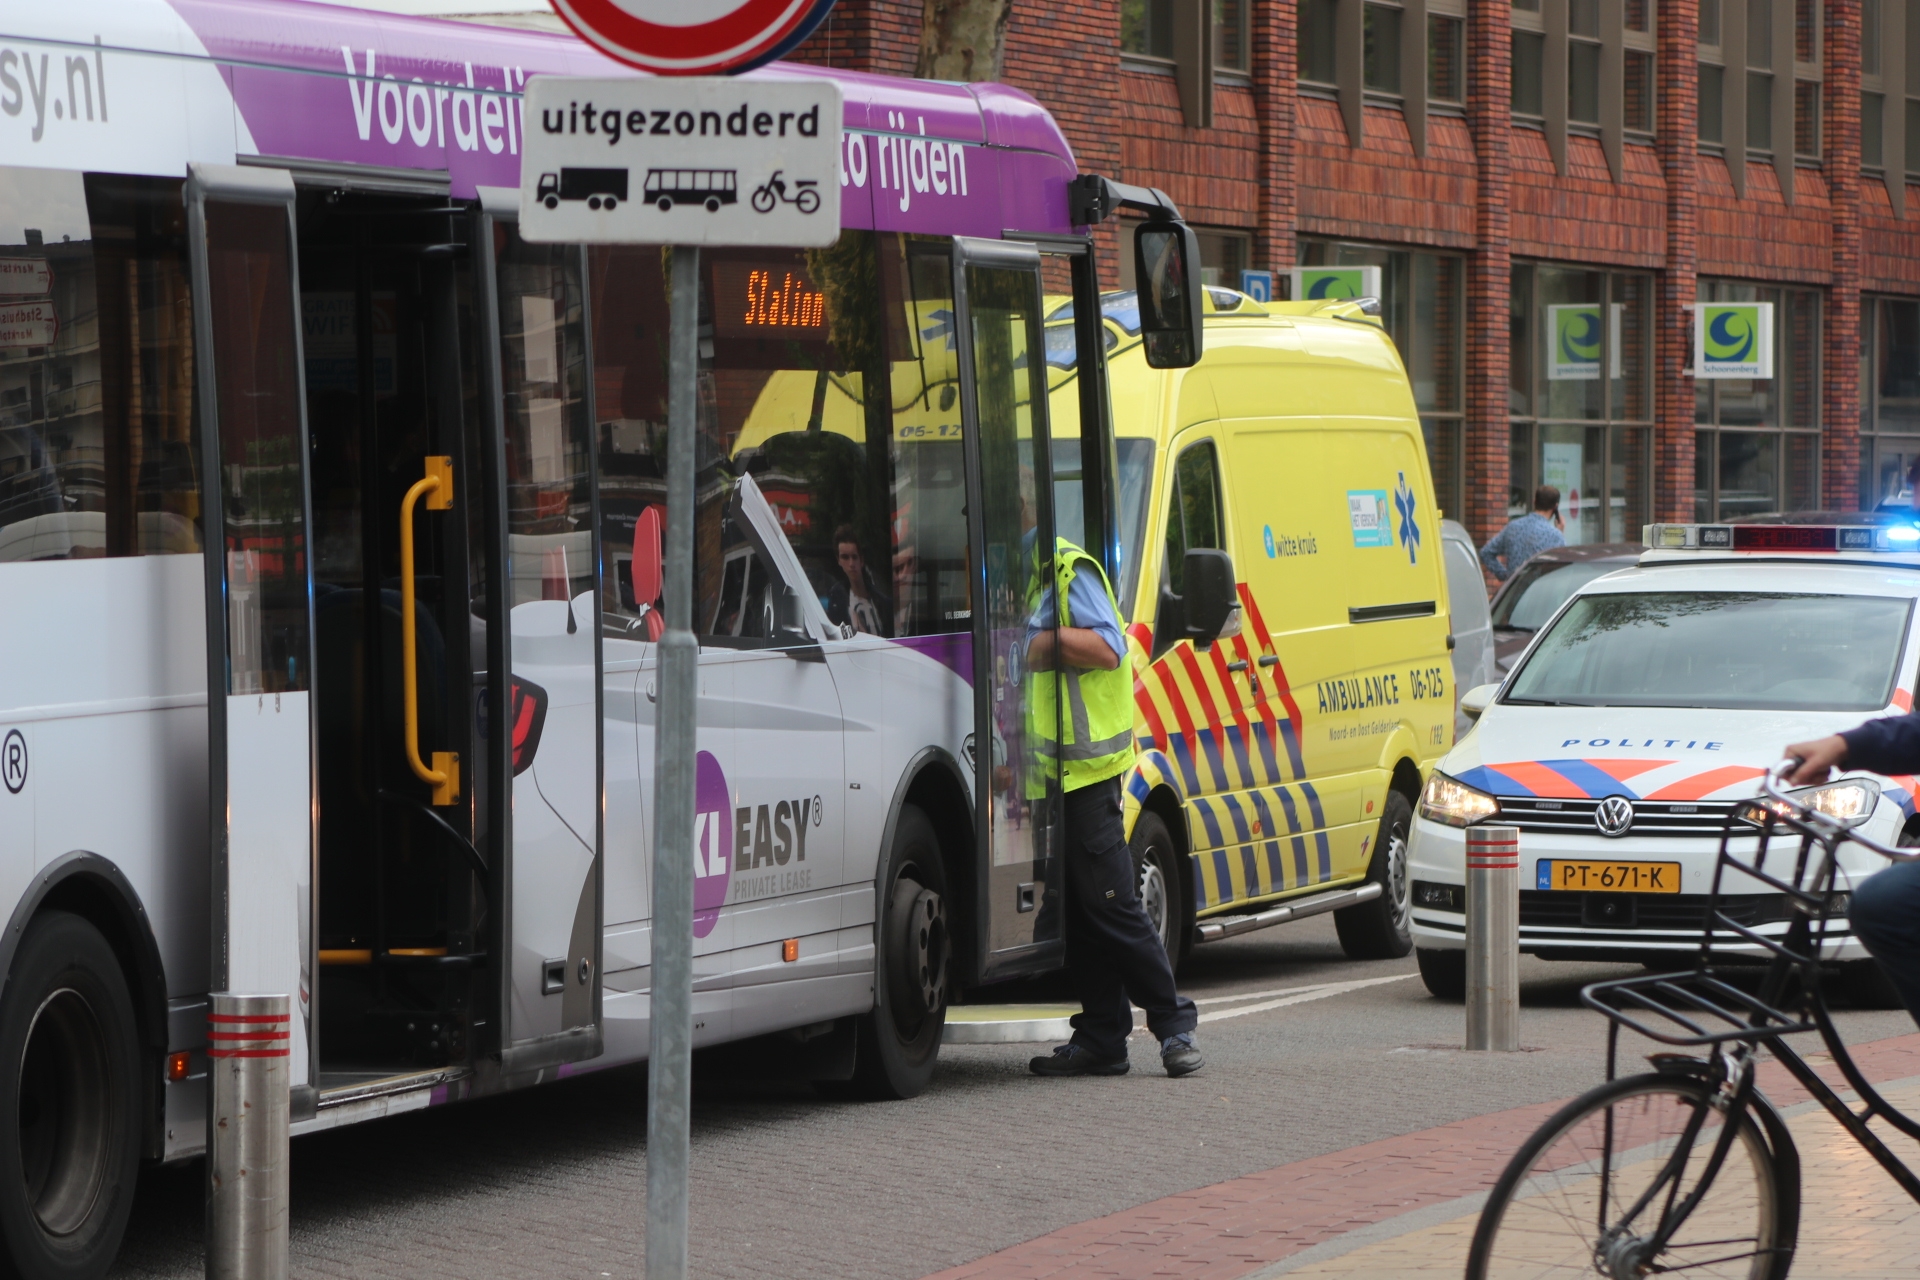 Vrouw gewond na botsing met stadsbus